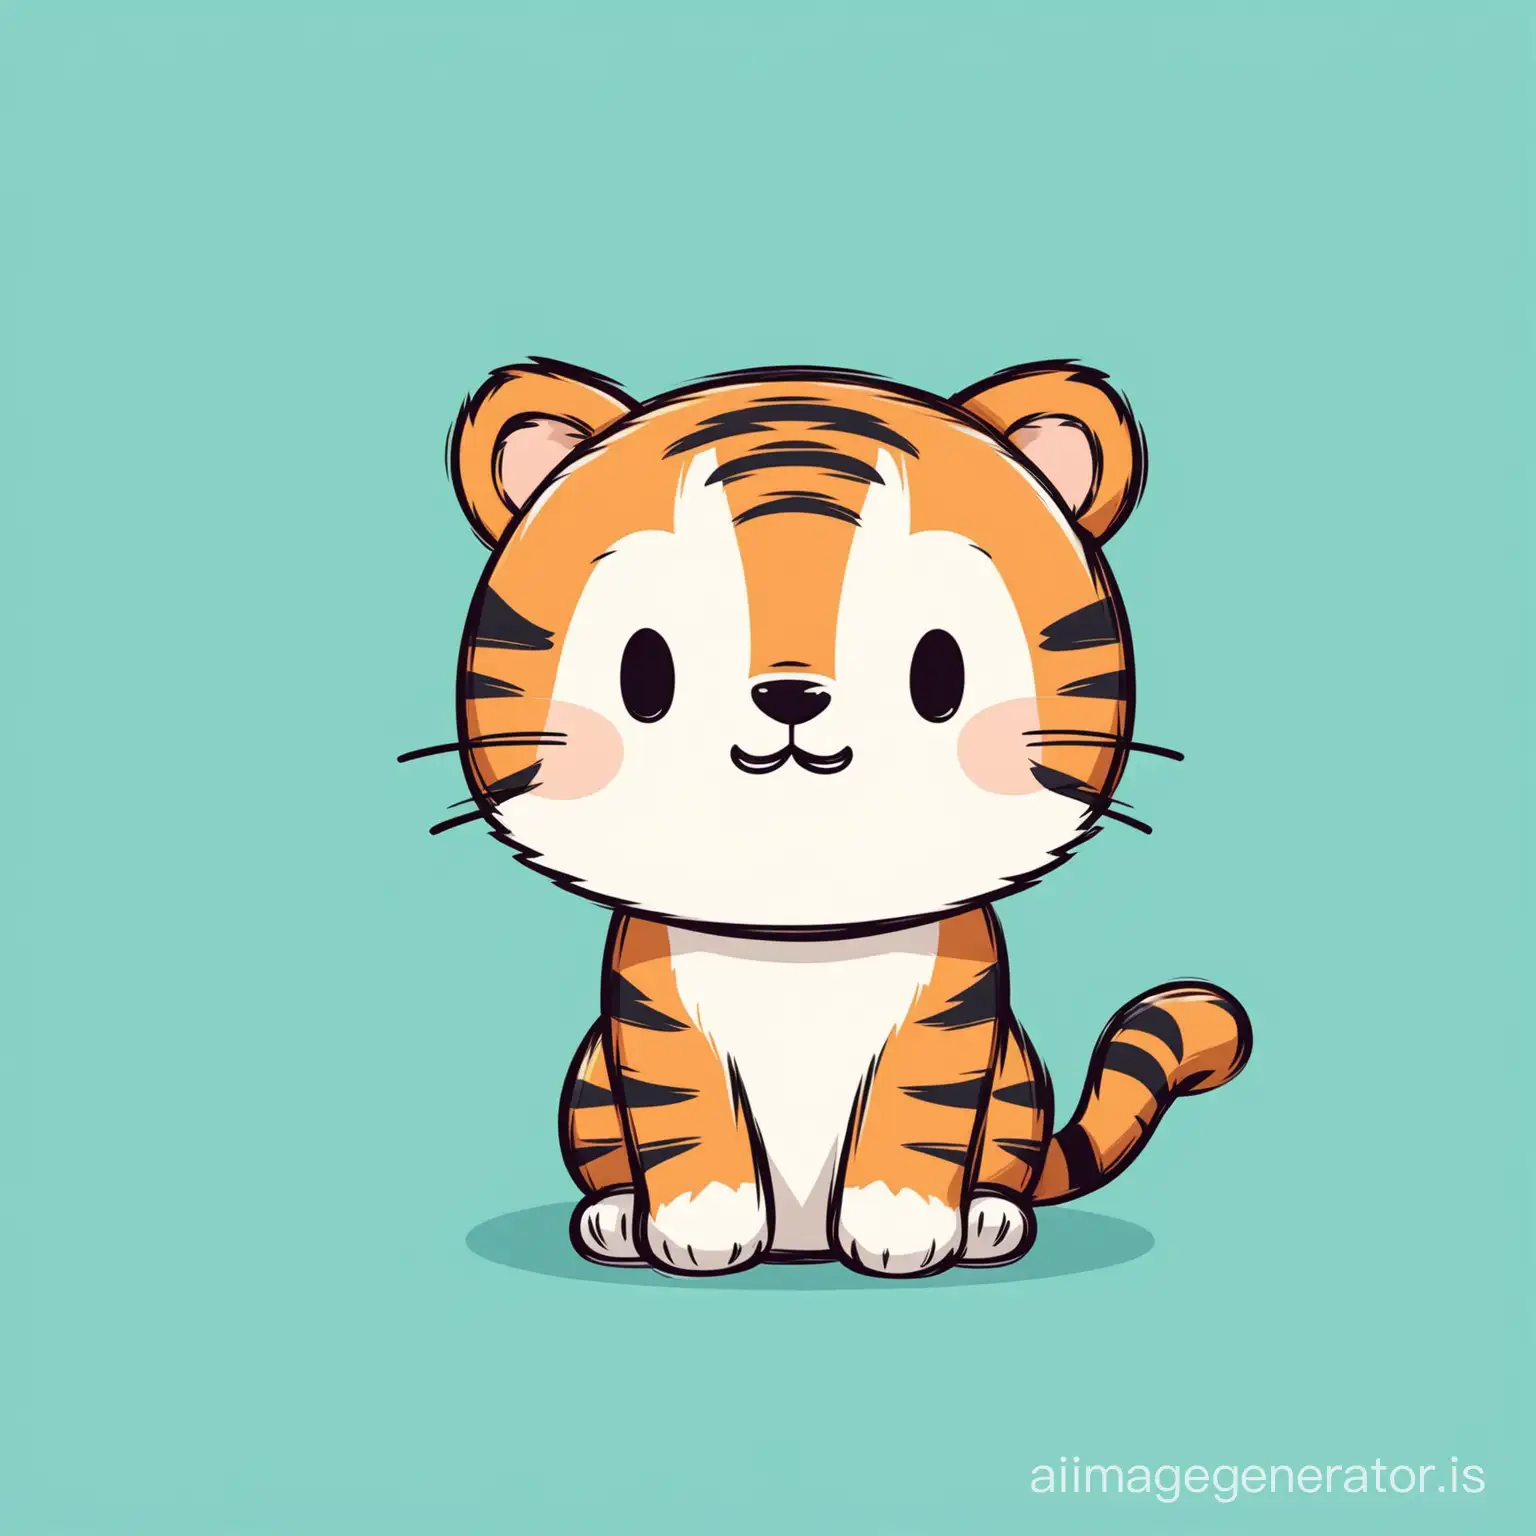 Playful-Minimalistic-Cartoon-Tiger-Illustration